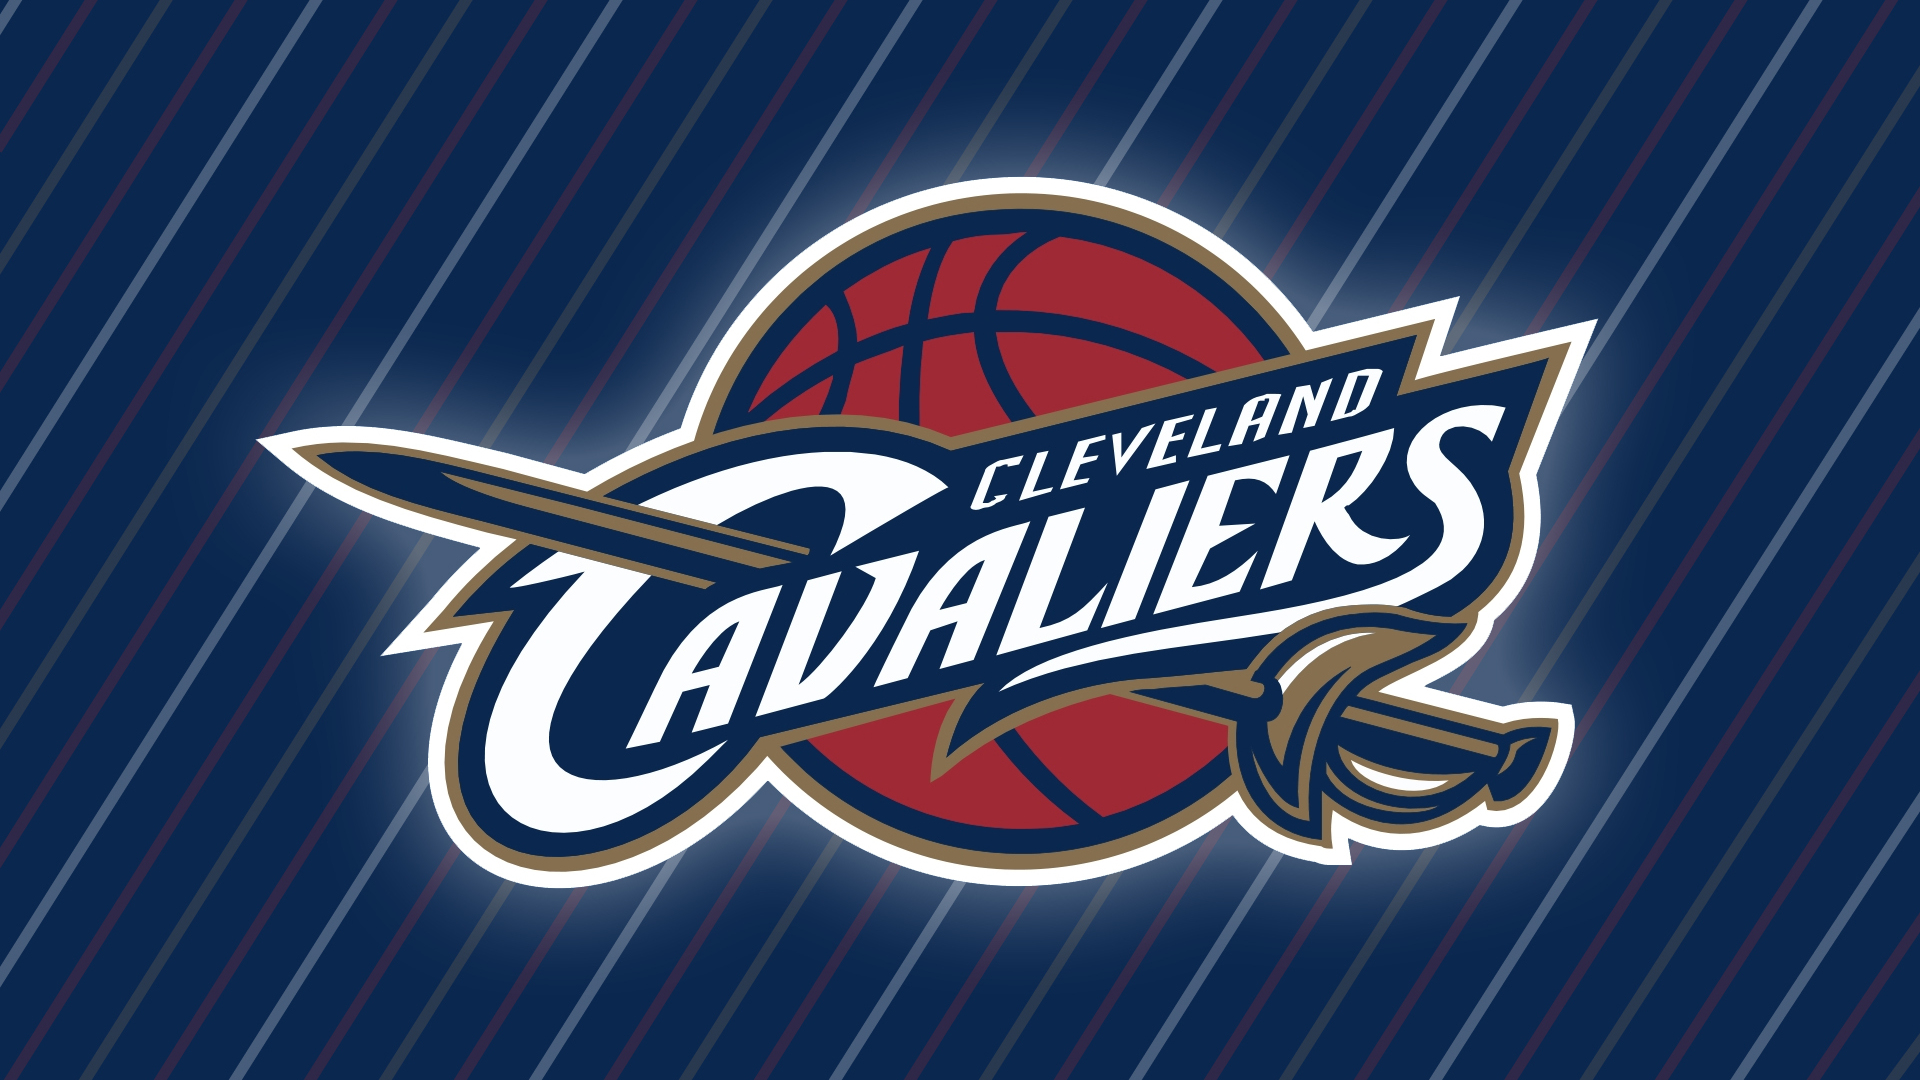 Desktop Wallpaper Cleveland Cavaliers Team Logo, HD Image, Picture, Background, C1u1rf